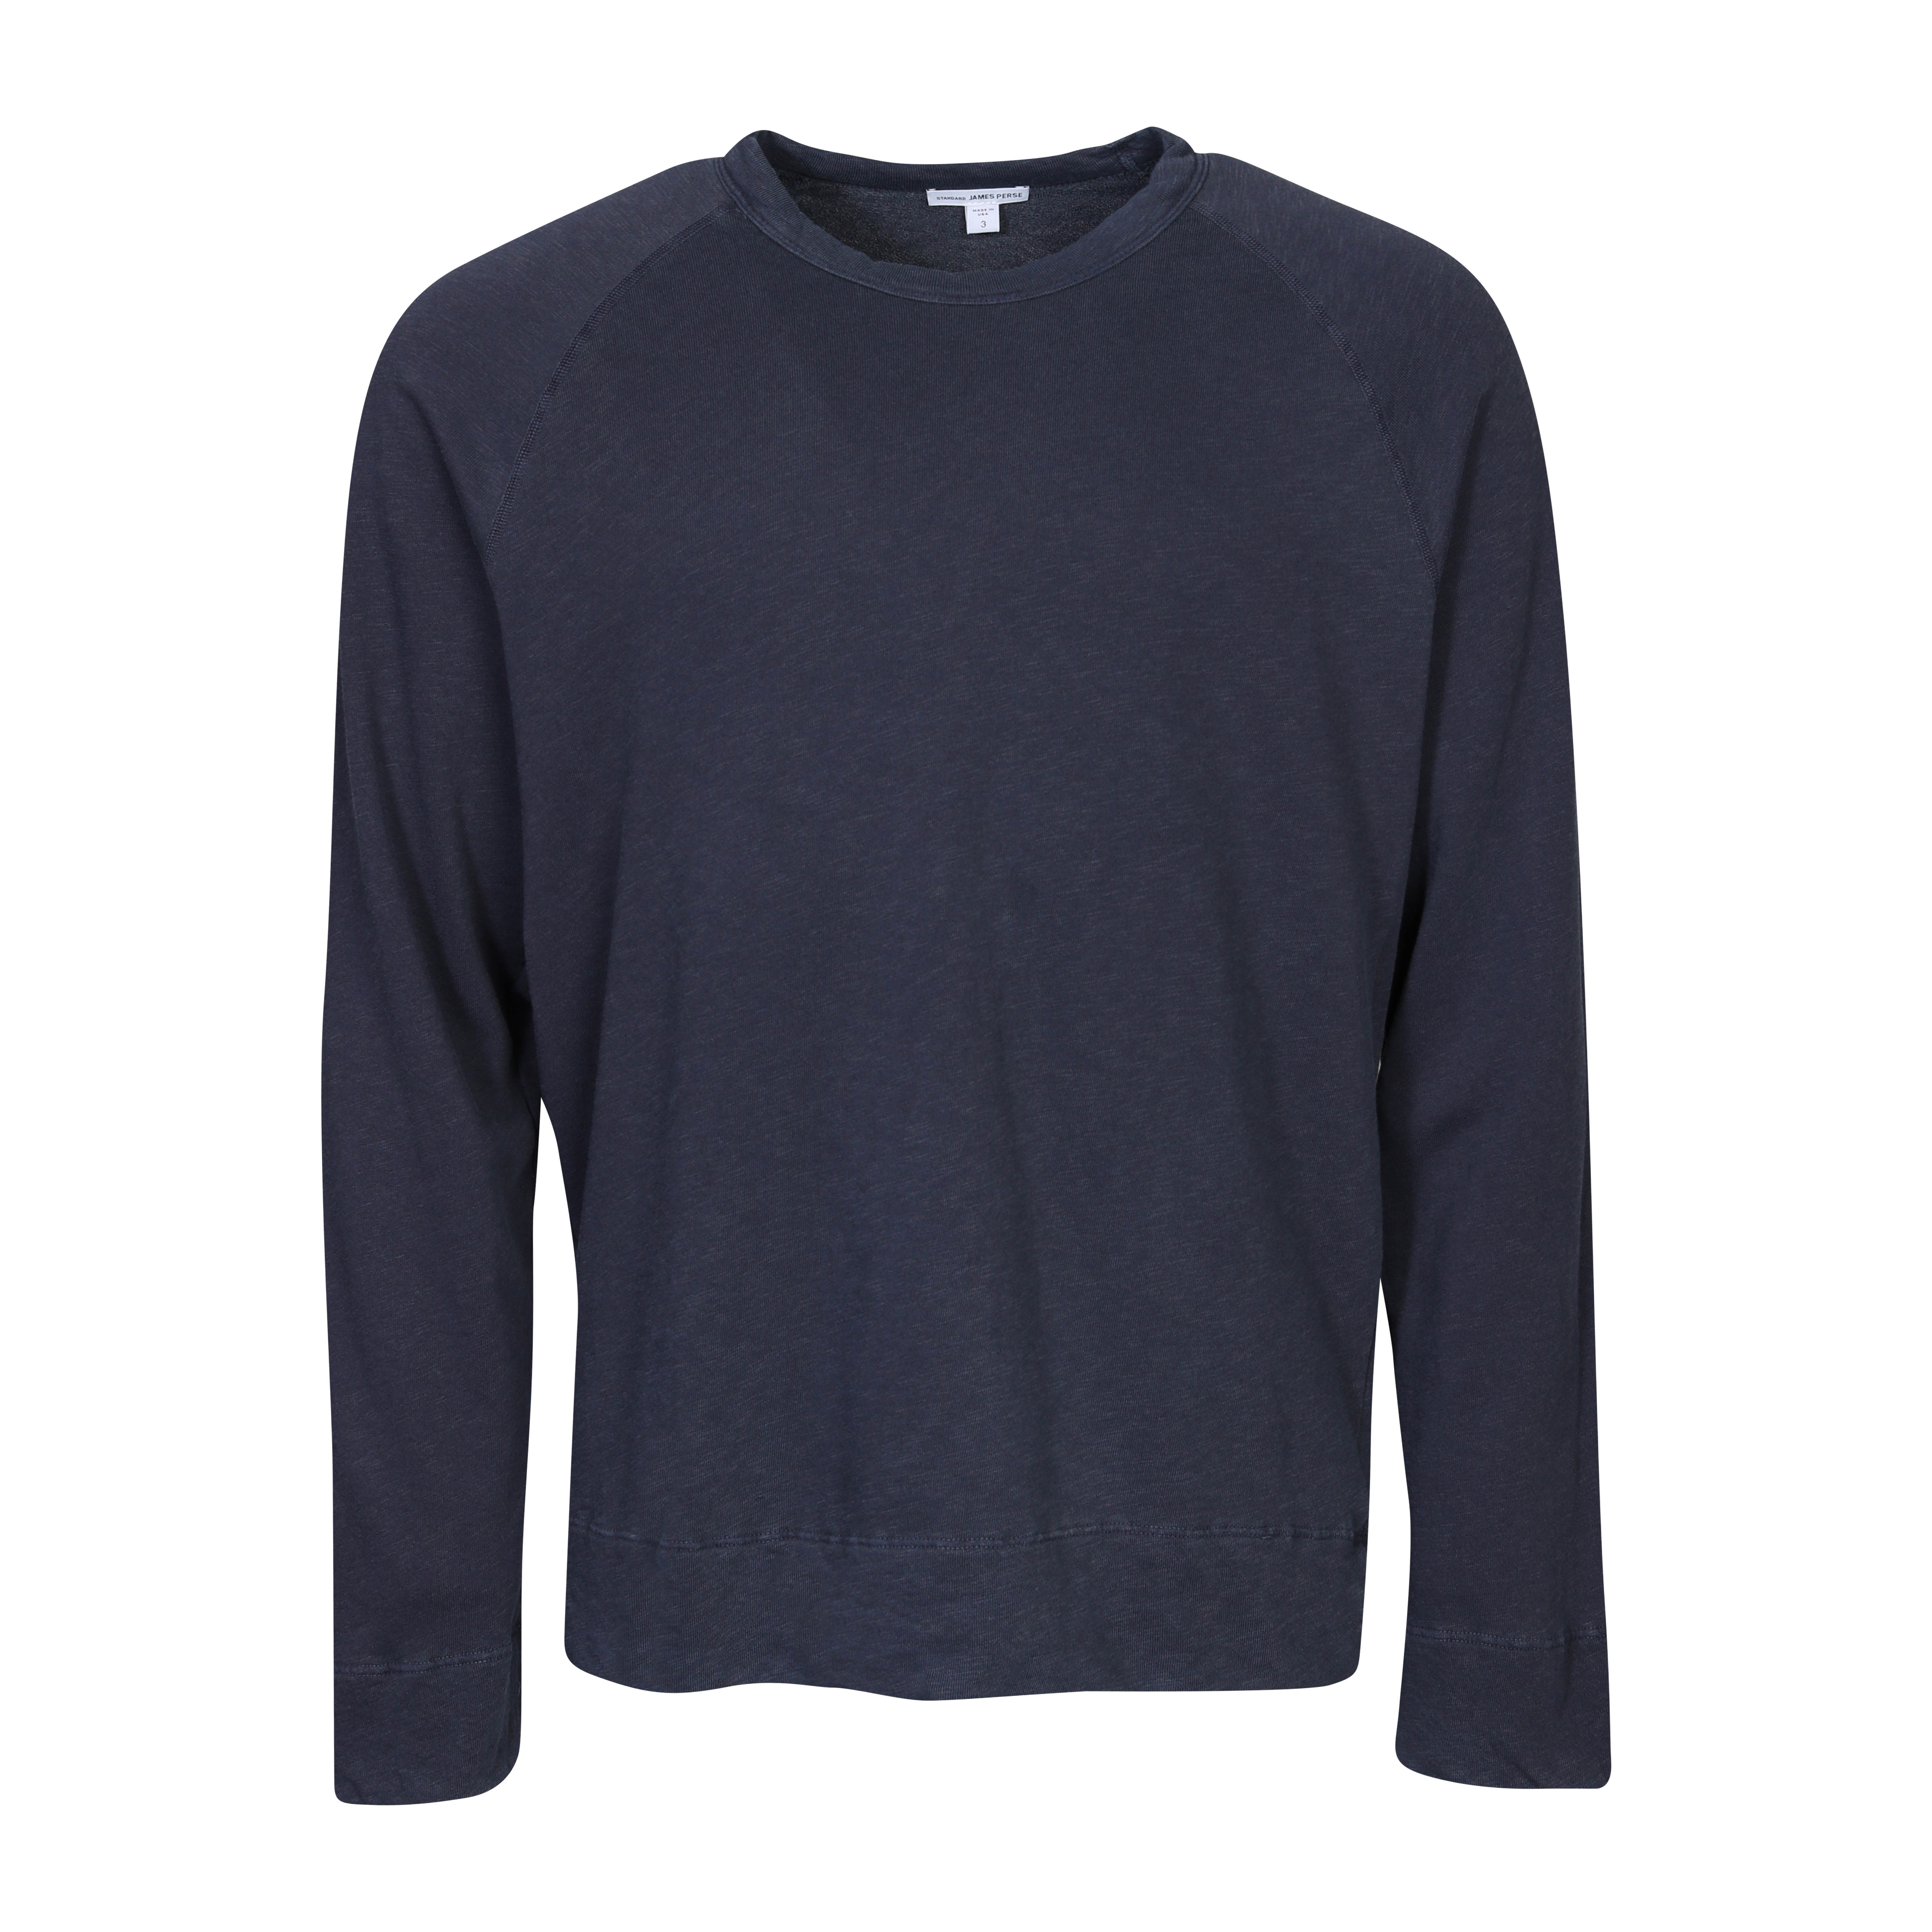 James Perse Vintage Cotton Raglan Sweater in Deep